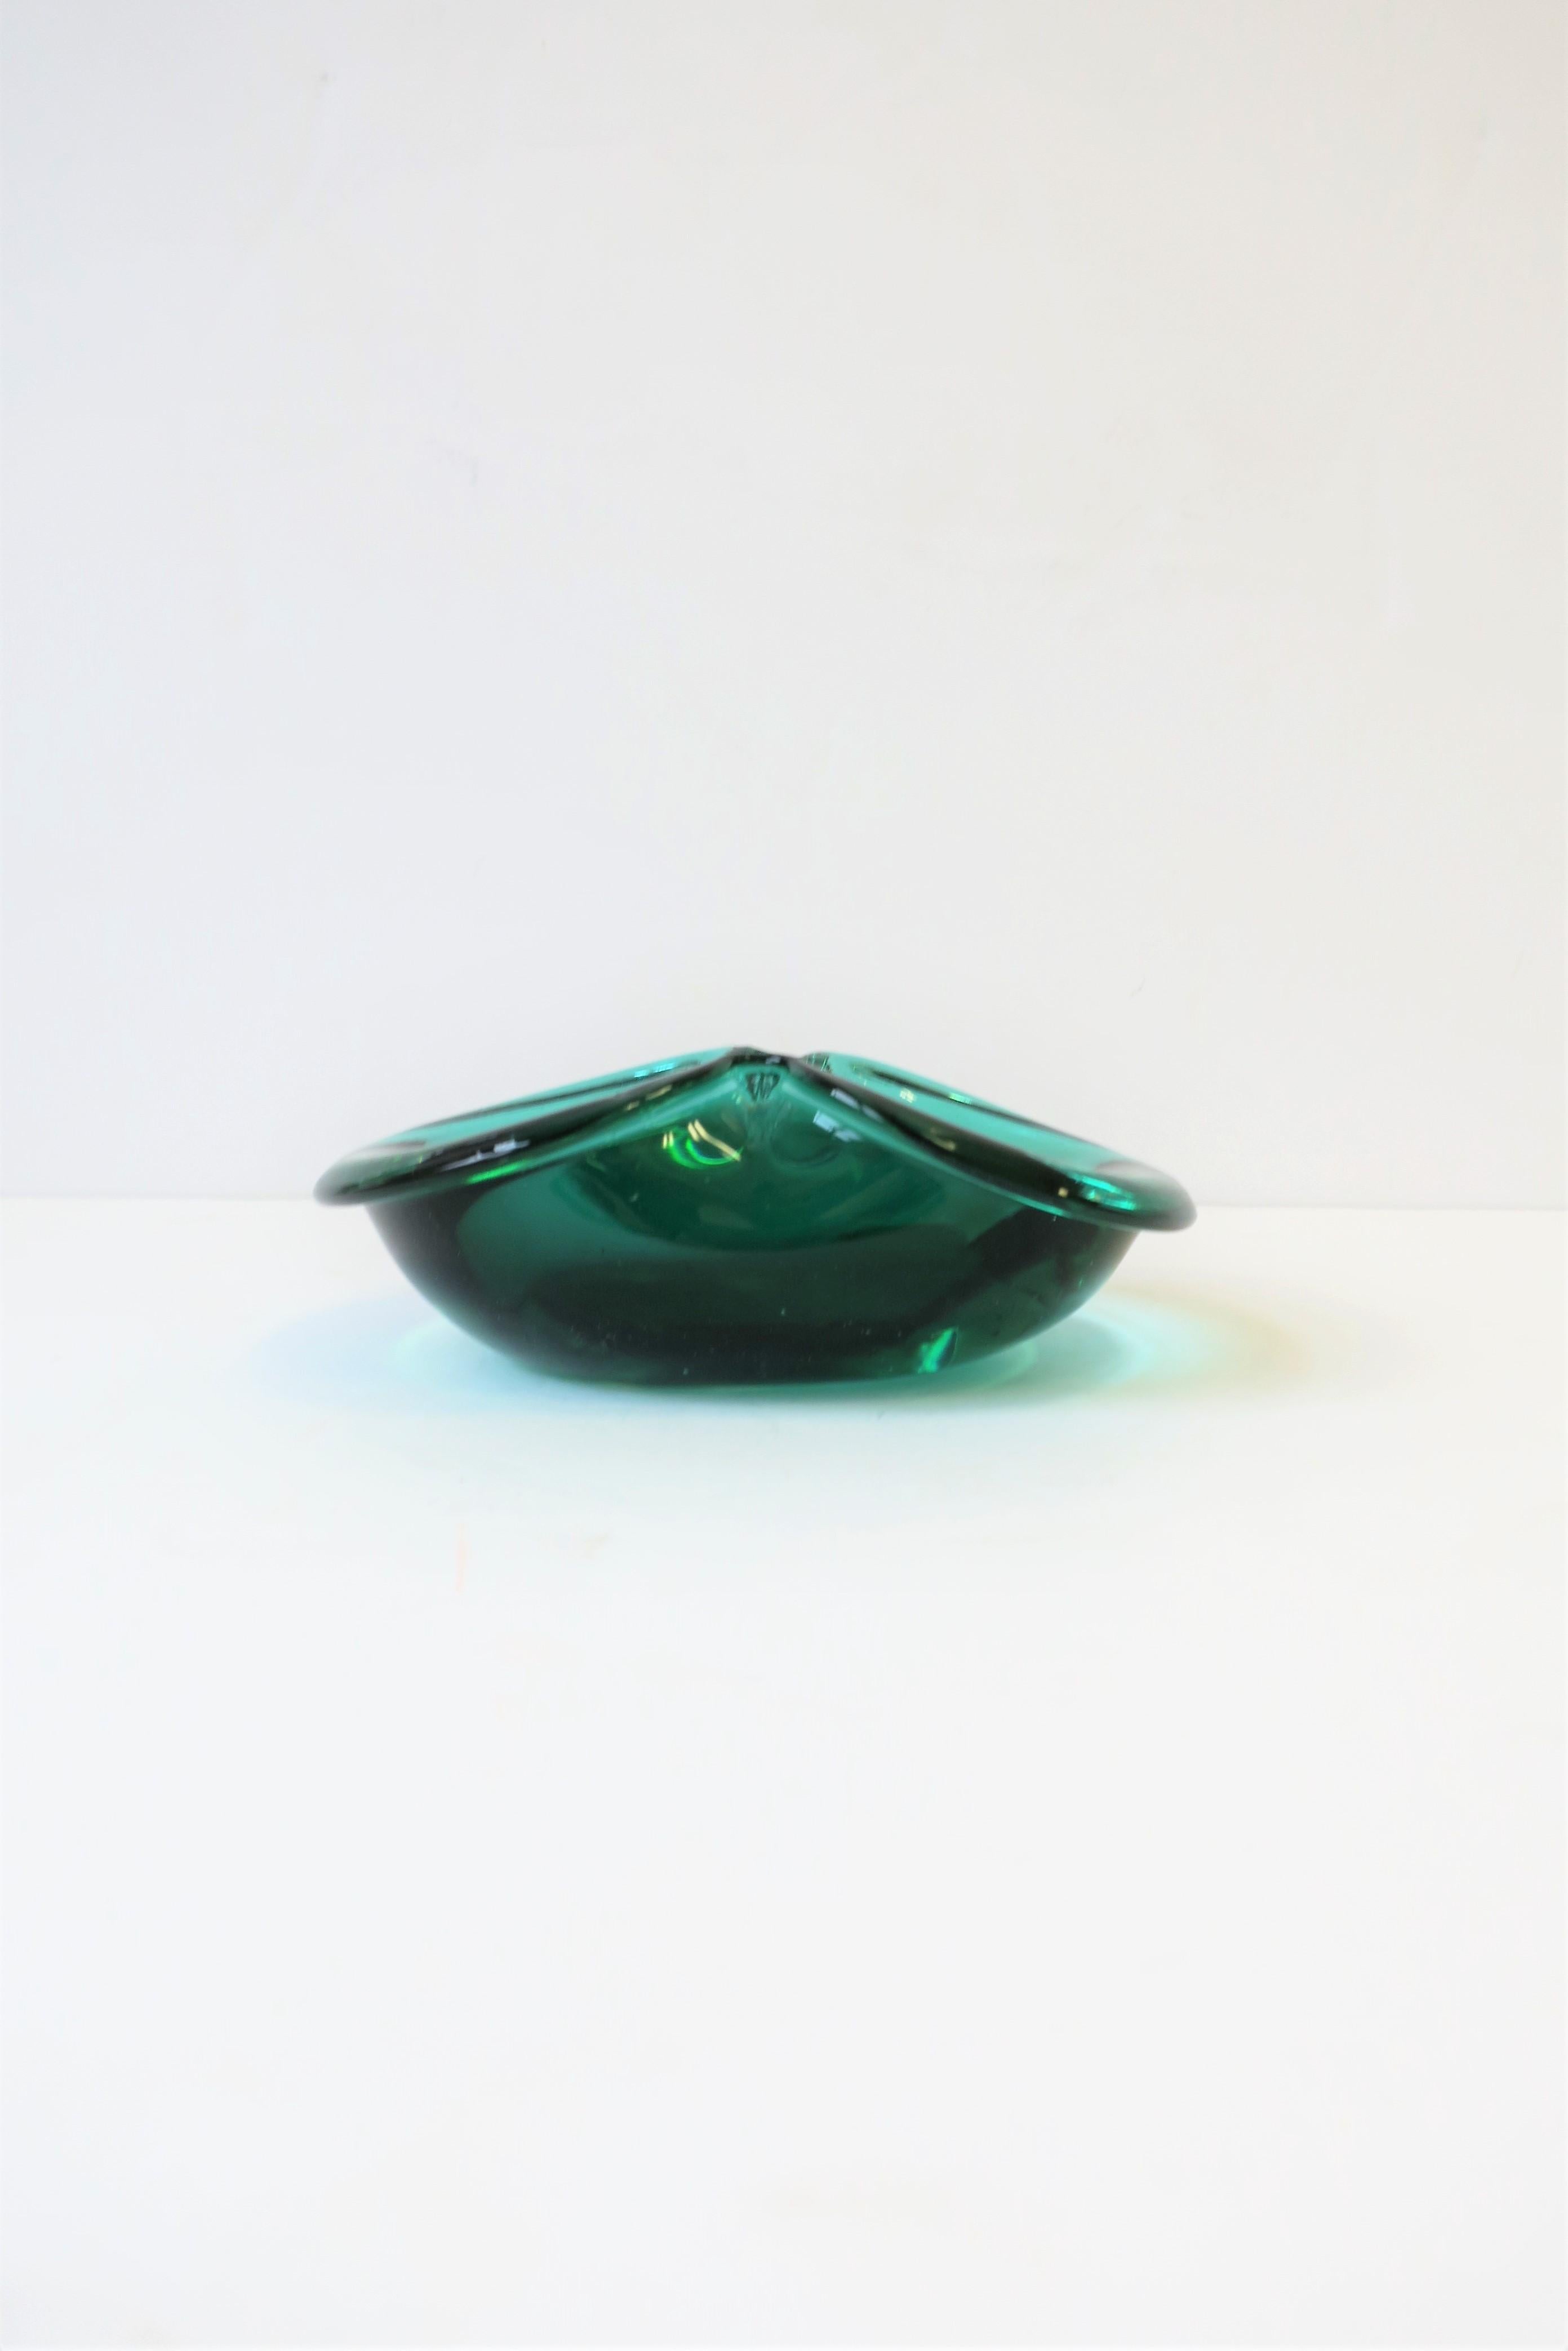 European Emerald Green Art Glass Bowl or Ashtray 2